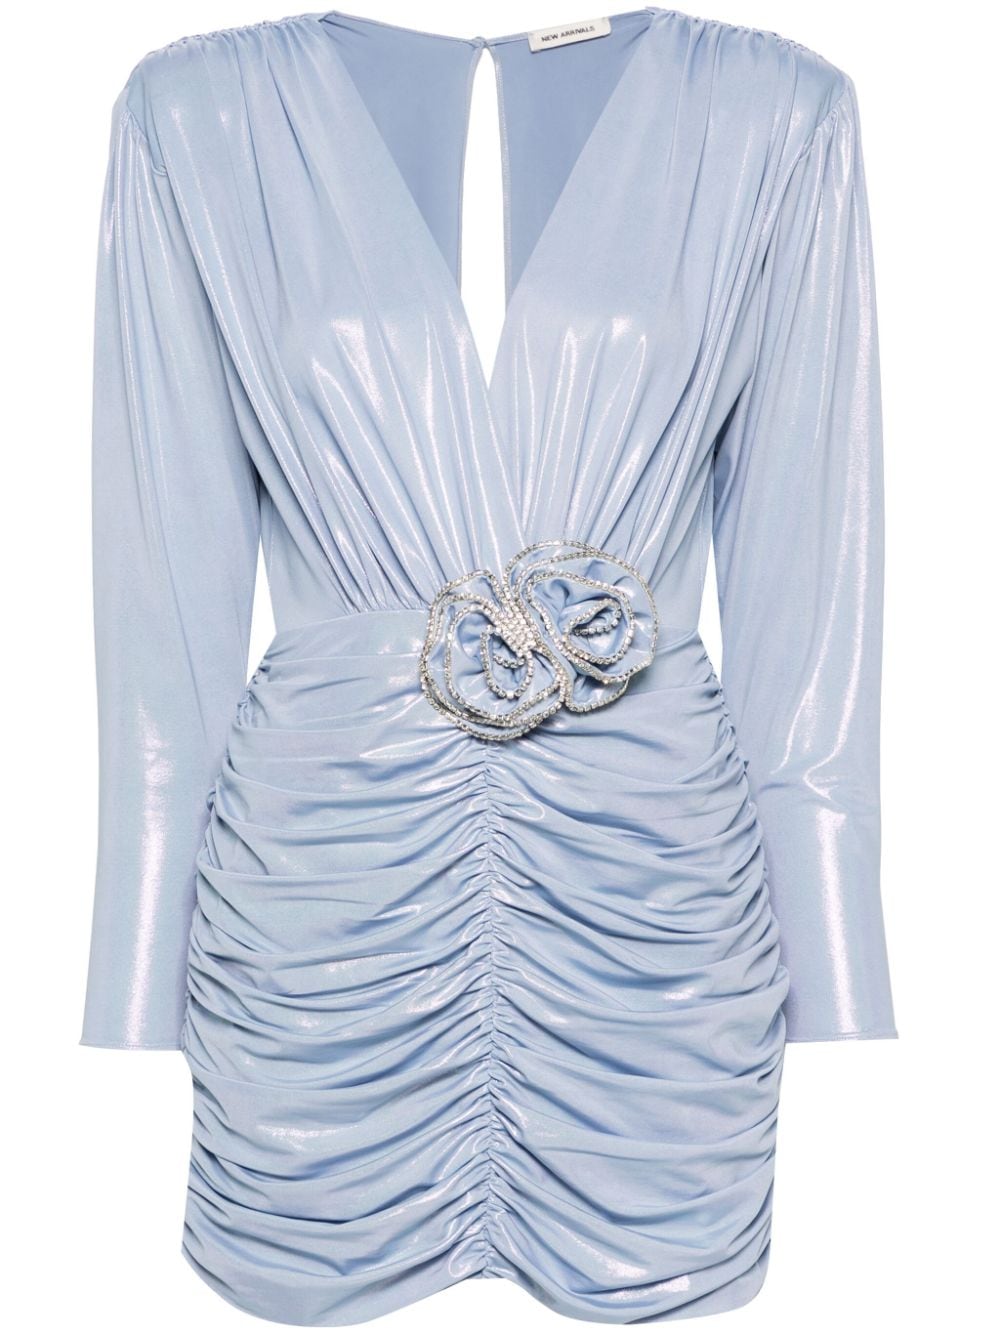 The New Arrivals Ilkyaz Ozel Bebe mini-jurk met iriserend-effect Blauw